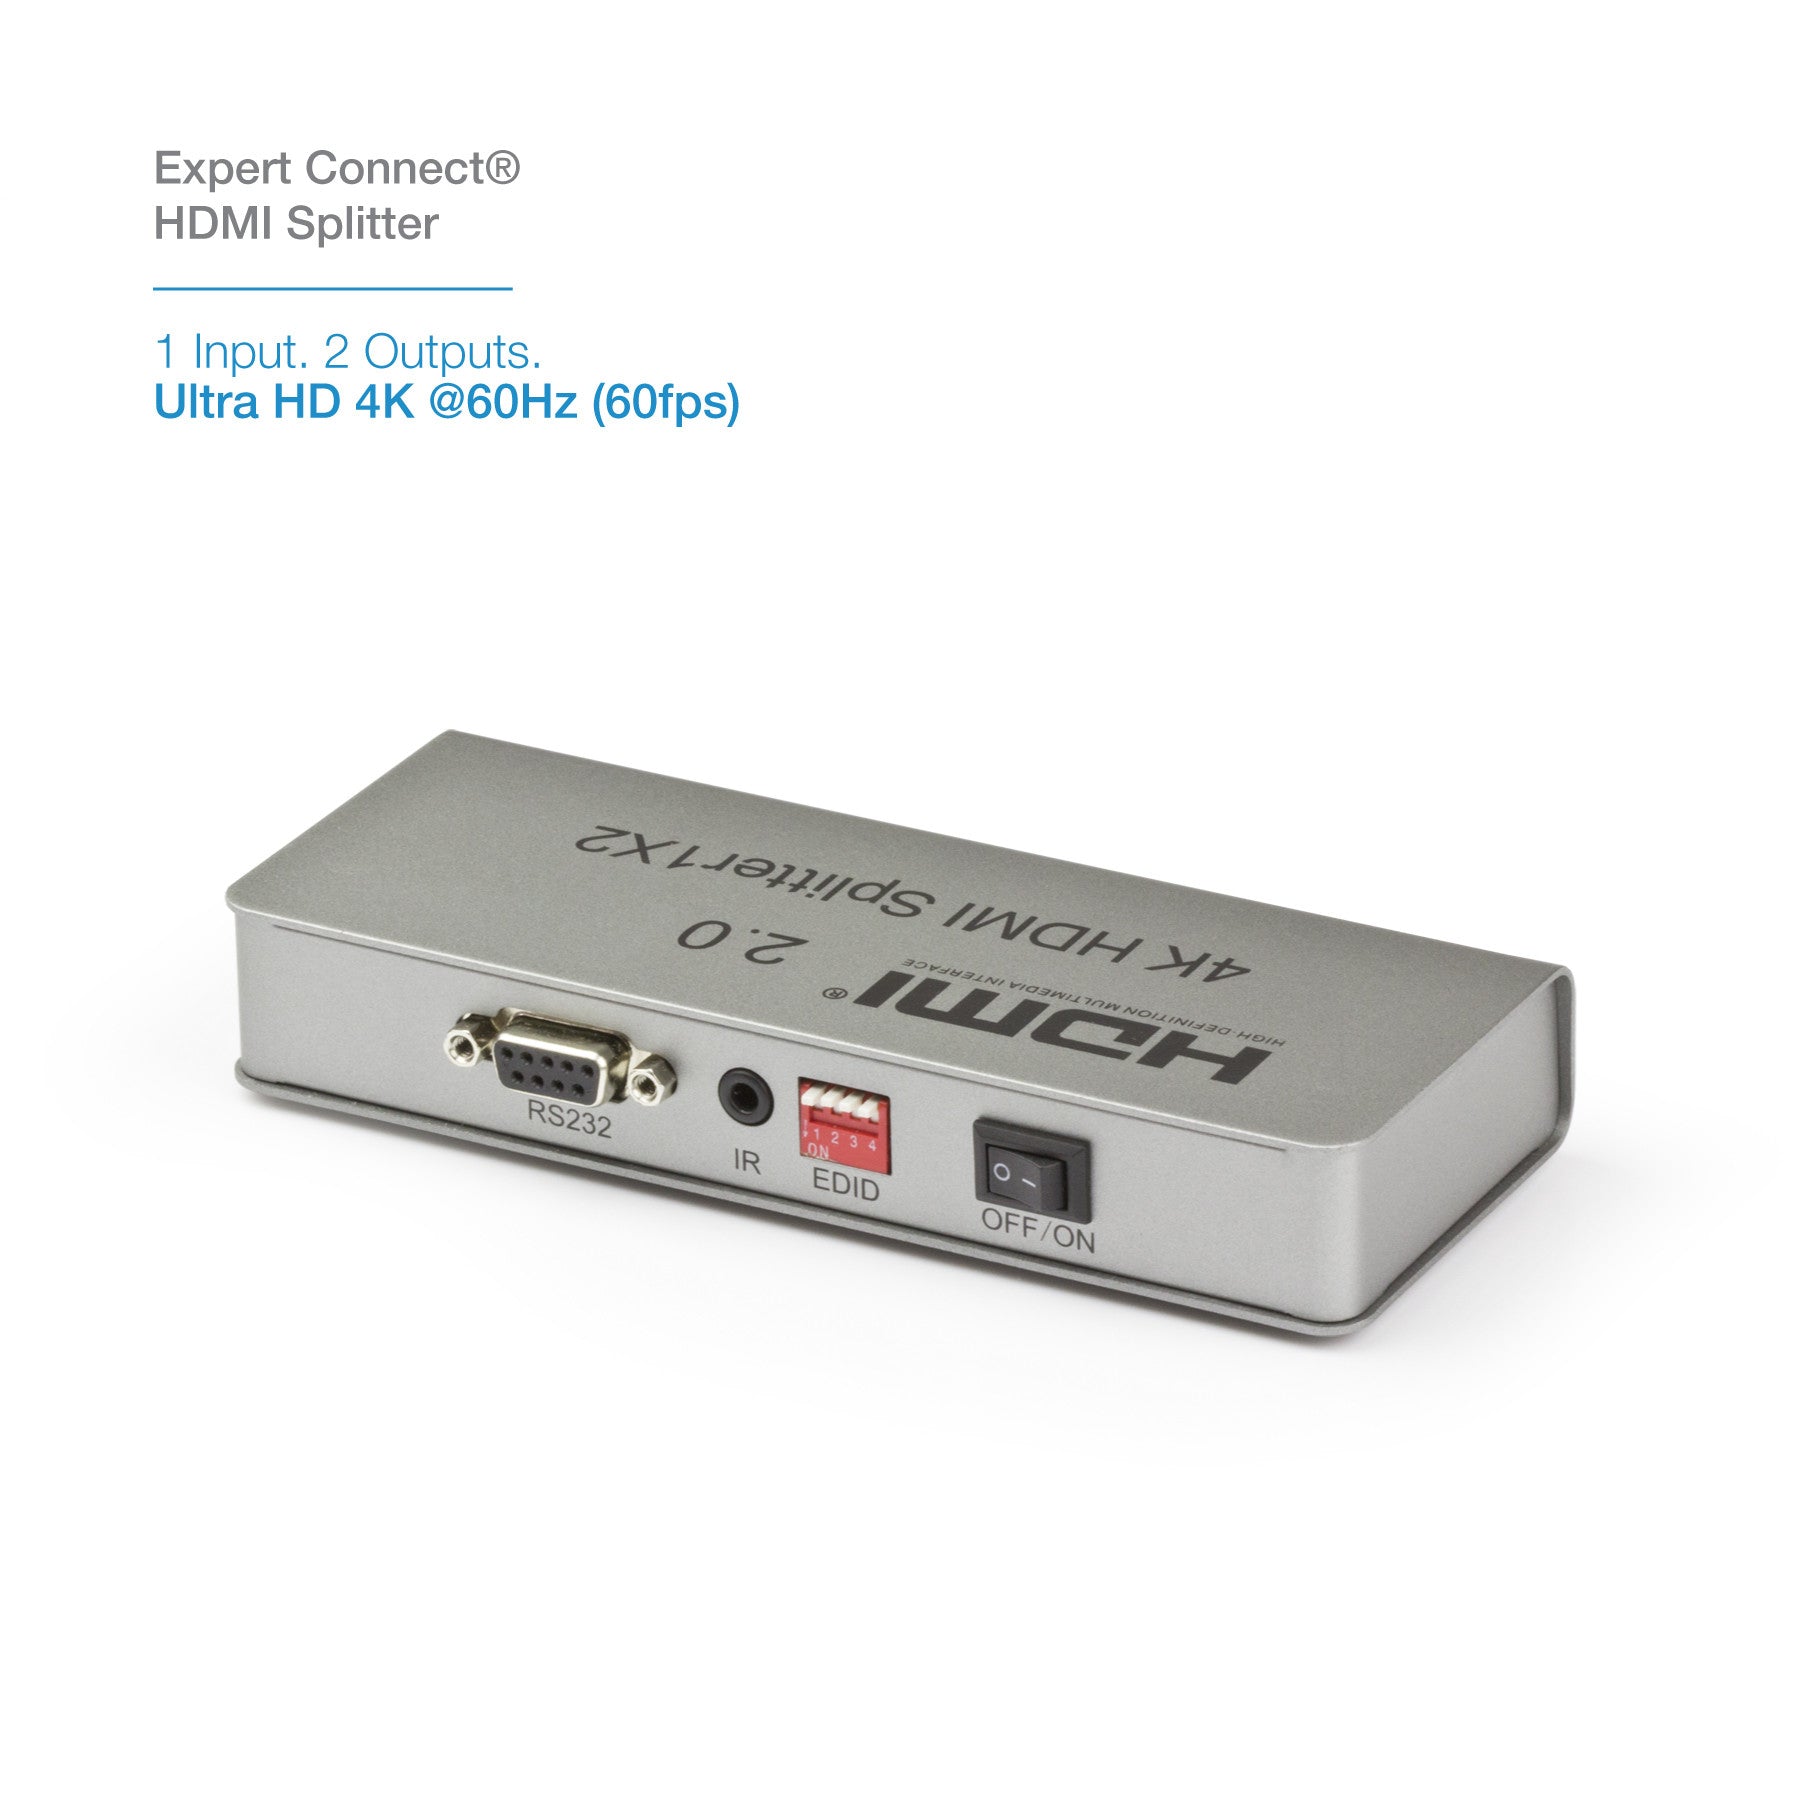 1x2 HDMI Splitter | Ultra HD 4K/2K @ 60Hz fps) HDR | HDCP 2.2 – Expert